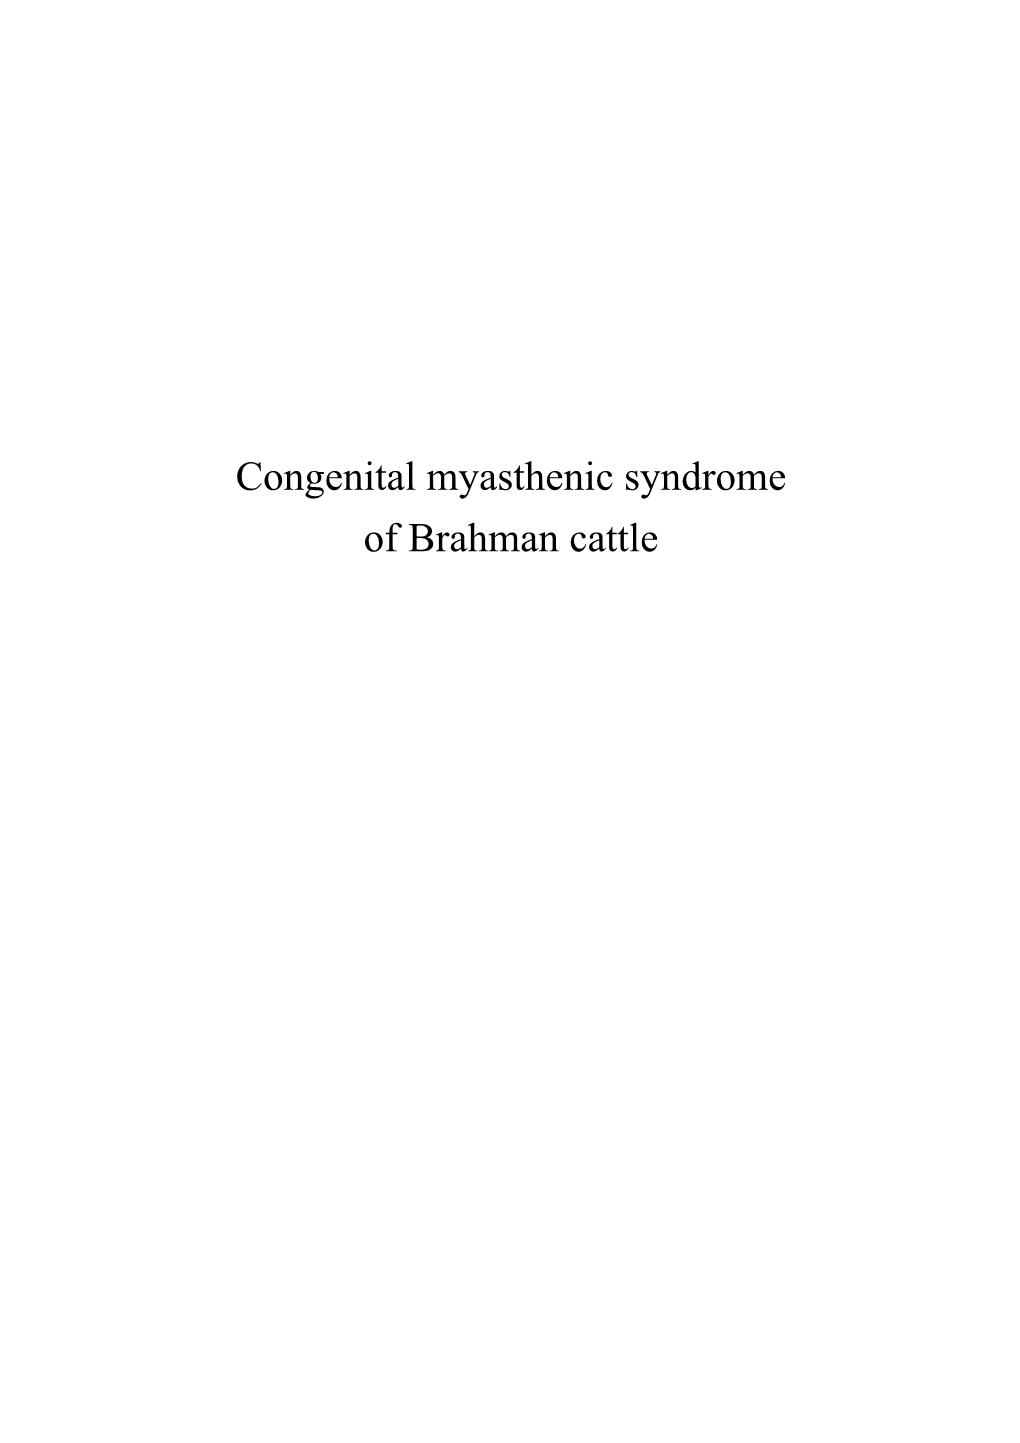 Congenital Myasthenic Syndrome of Brahman Cattle